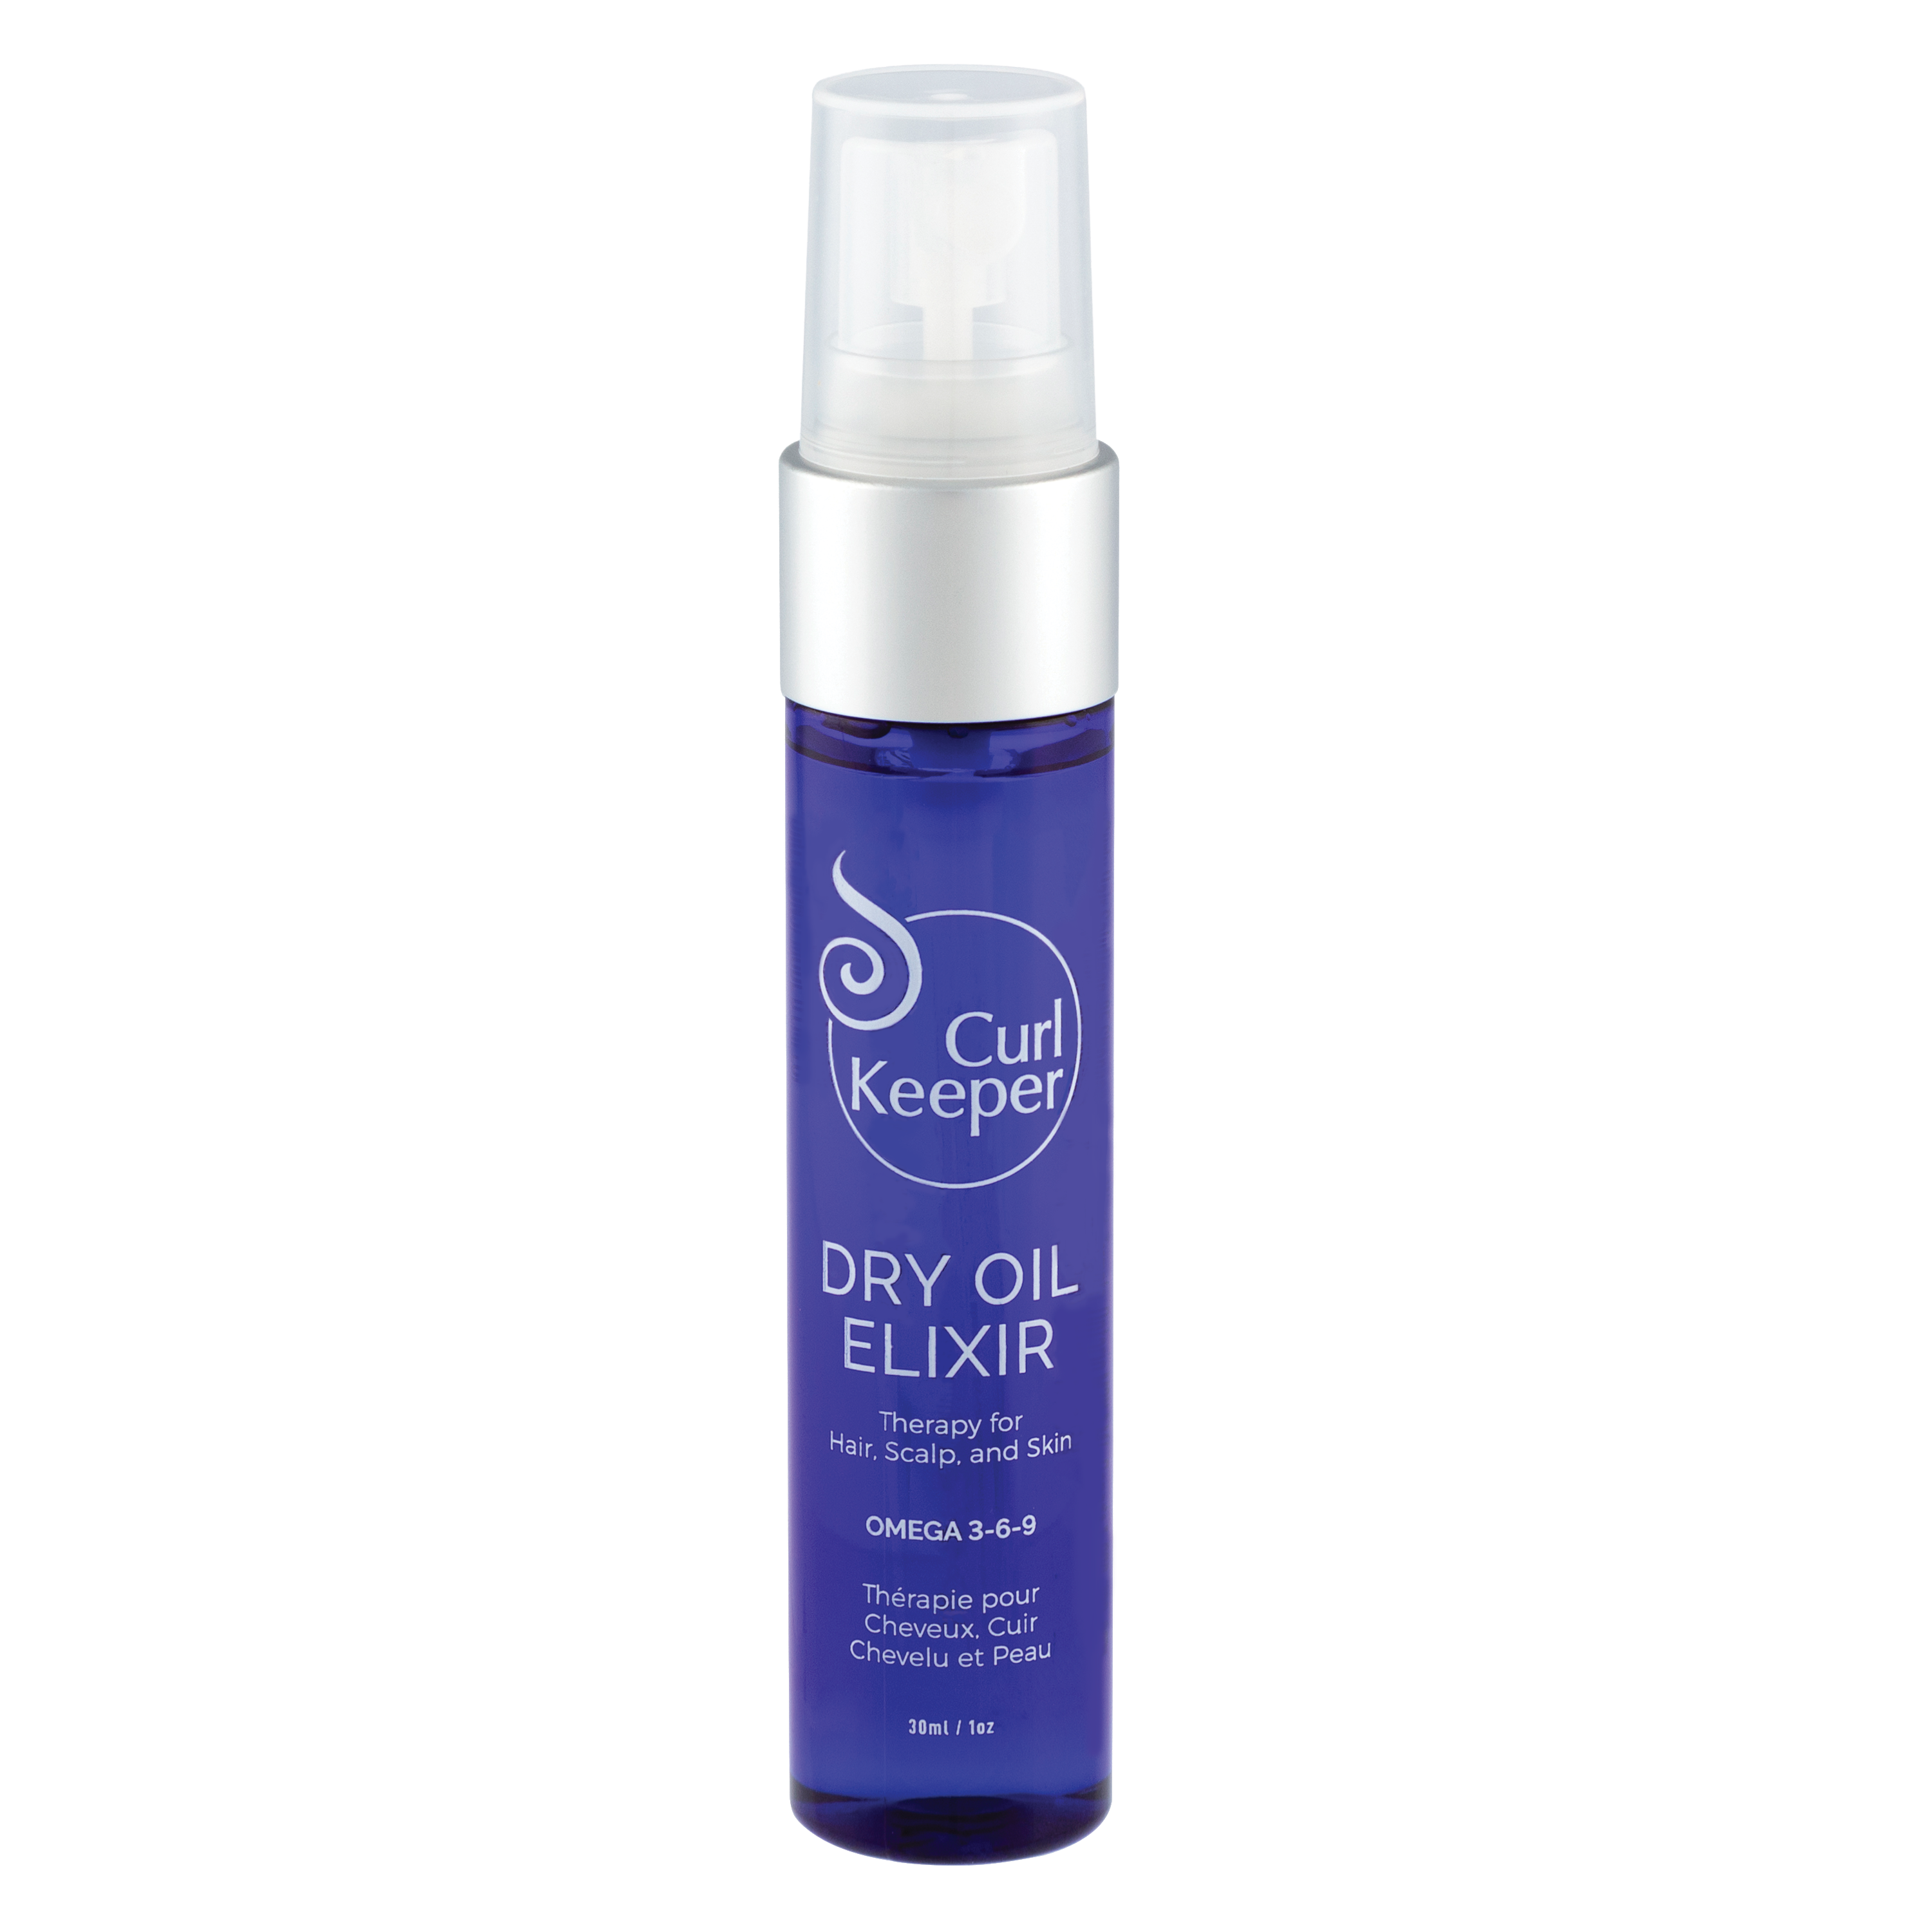 NEW! Curl Keeper® Dry Oil Elixir 